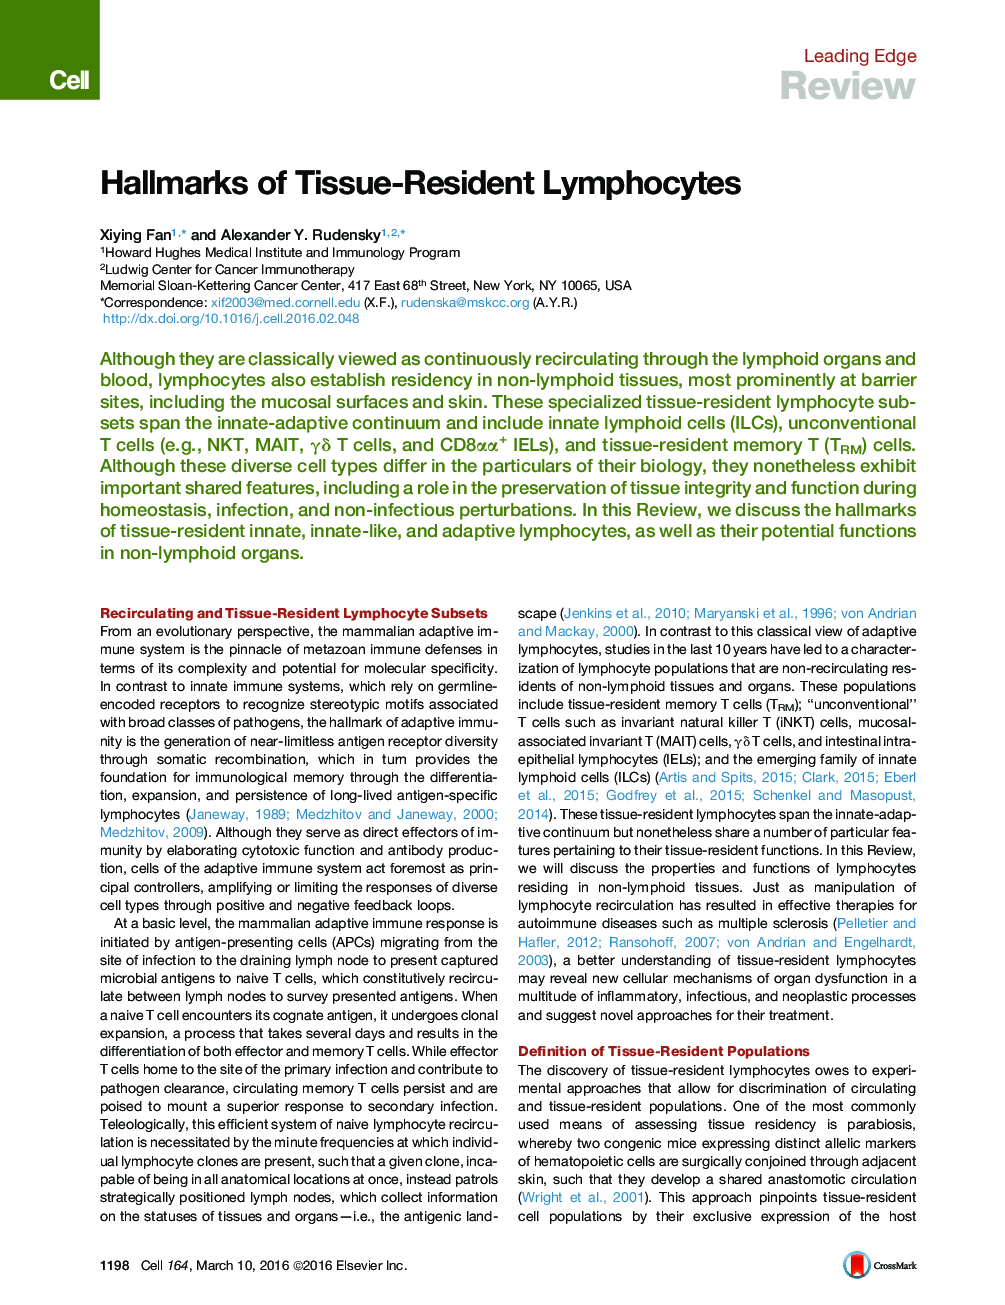 Hallmarks of Tissue-Resident Lymphocytes